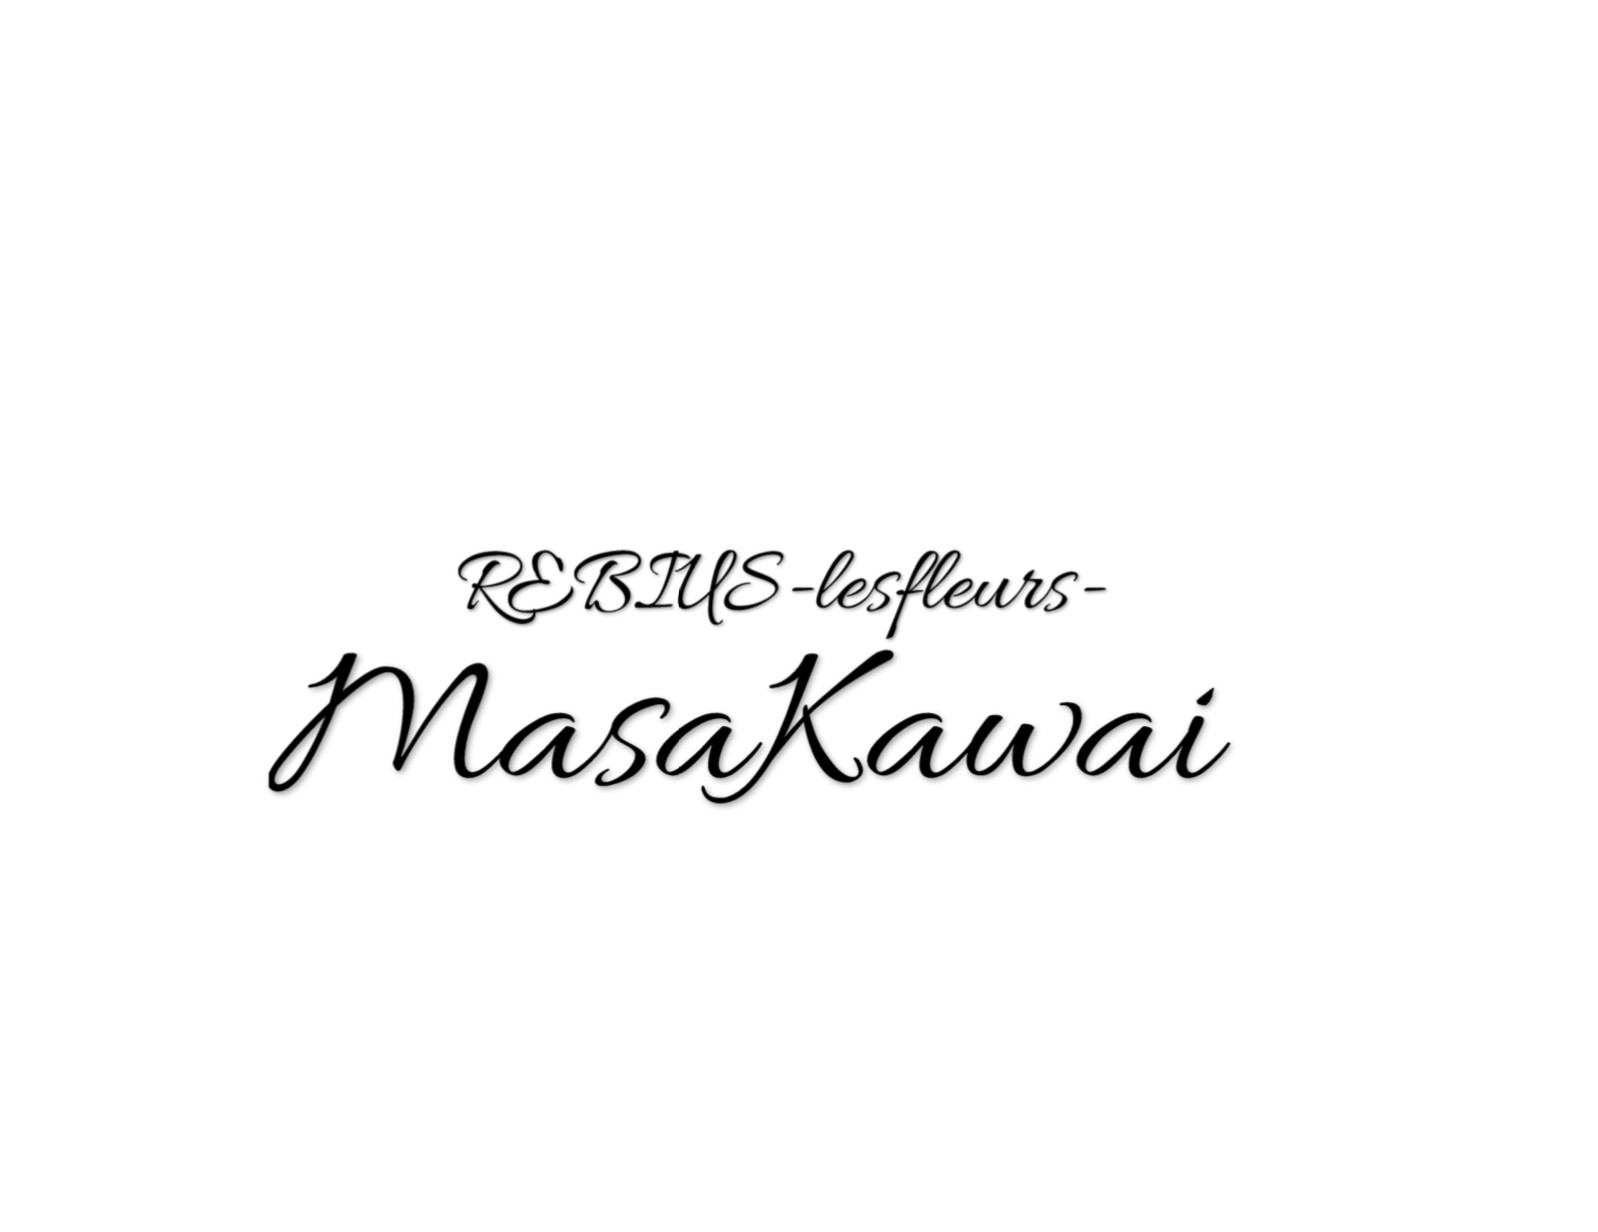 REBIUS-les fleurs- MASA KAWAI